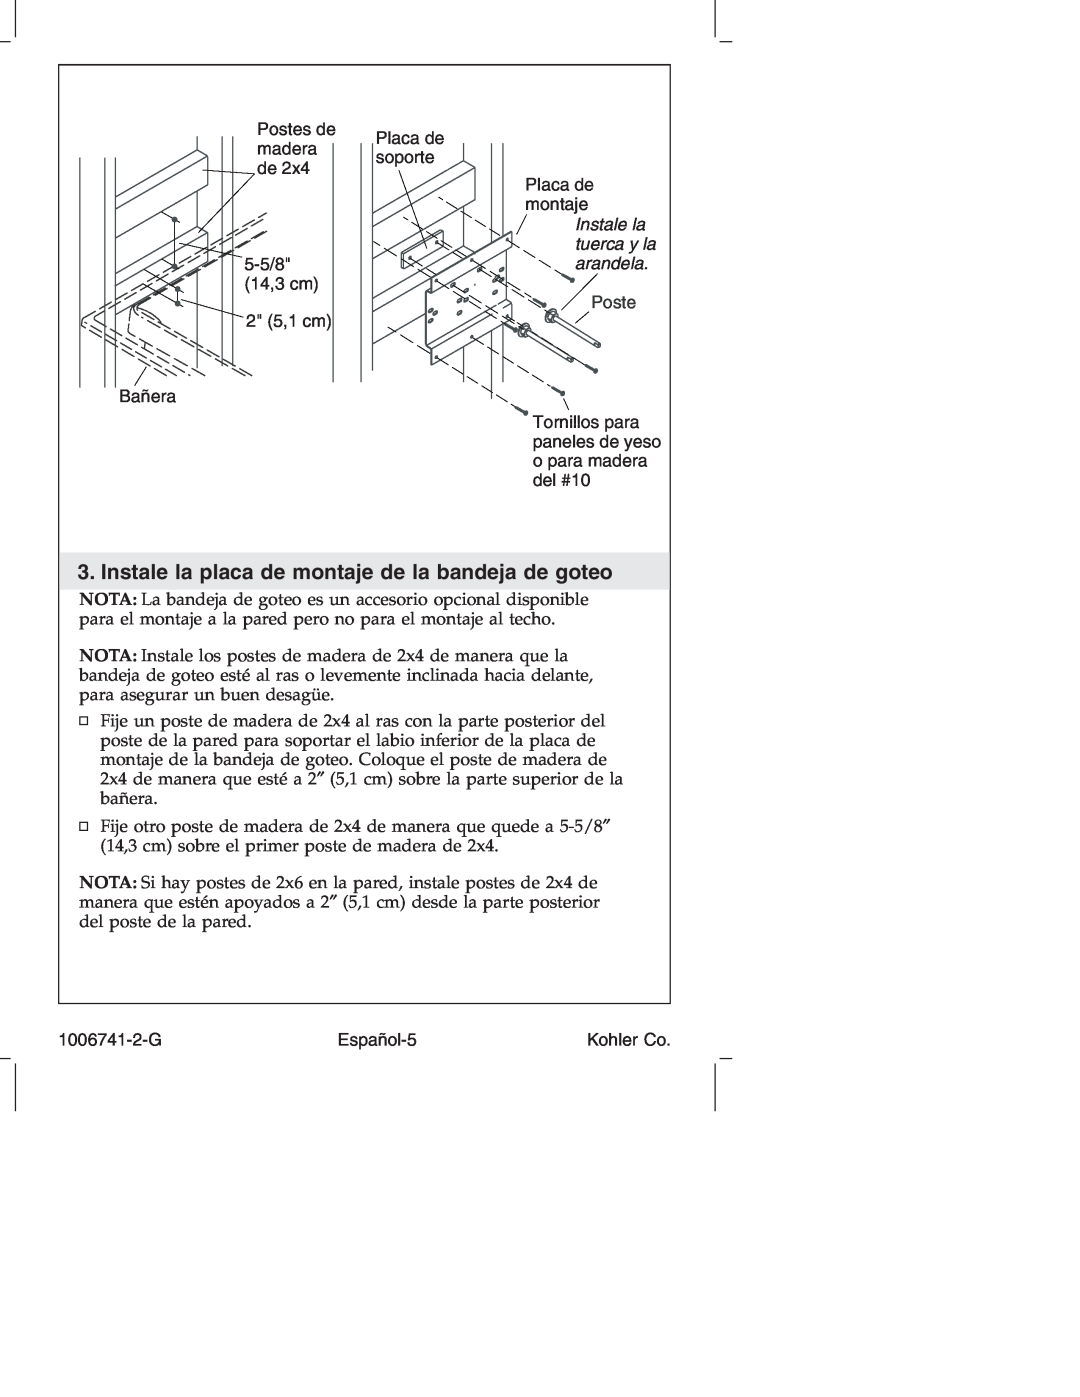 Kohler K-922/K-923 Instale la placa de montaje de la bandeja de goteo, Postes de, Placa de, madera, soporte, Español-5 